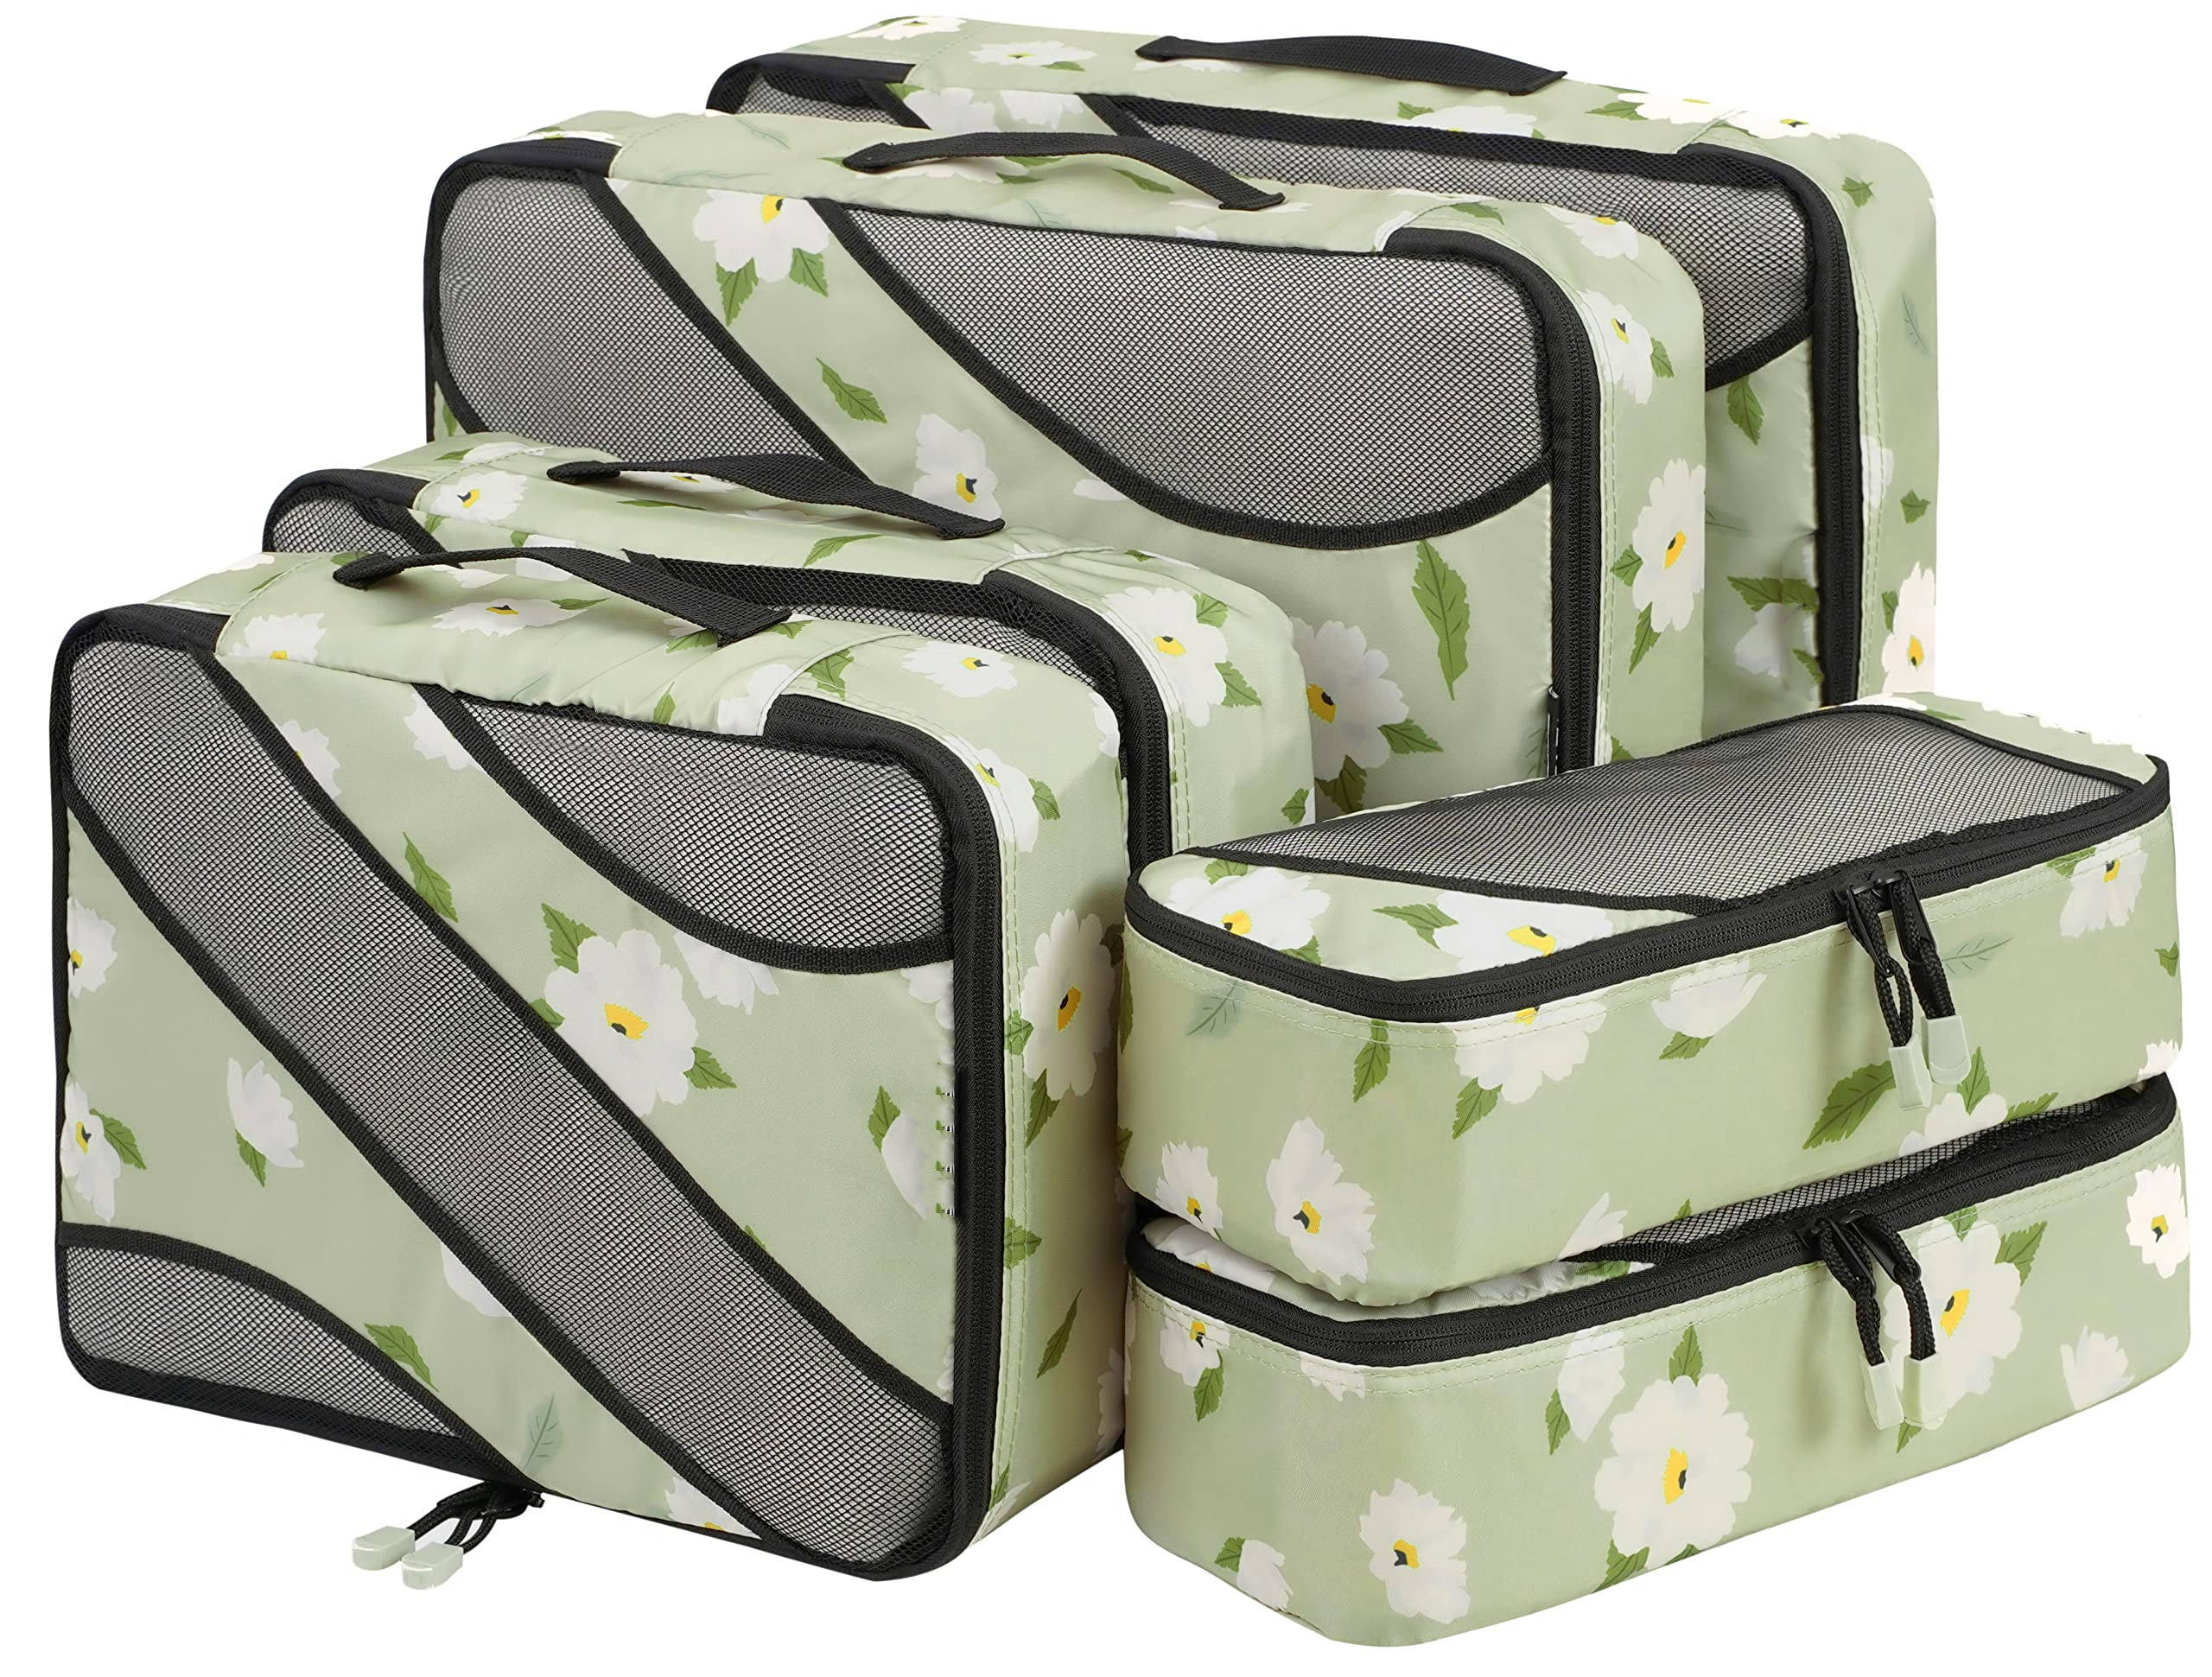 6 Set Travel Packing Cubes Bag Product Details